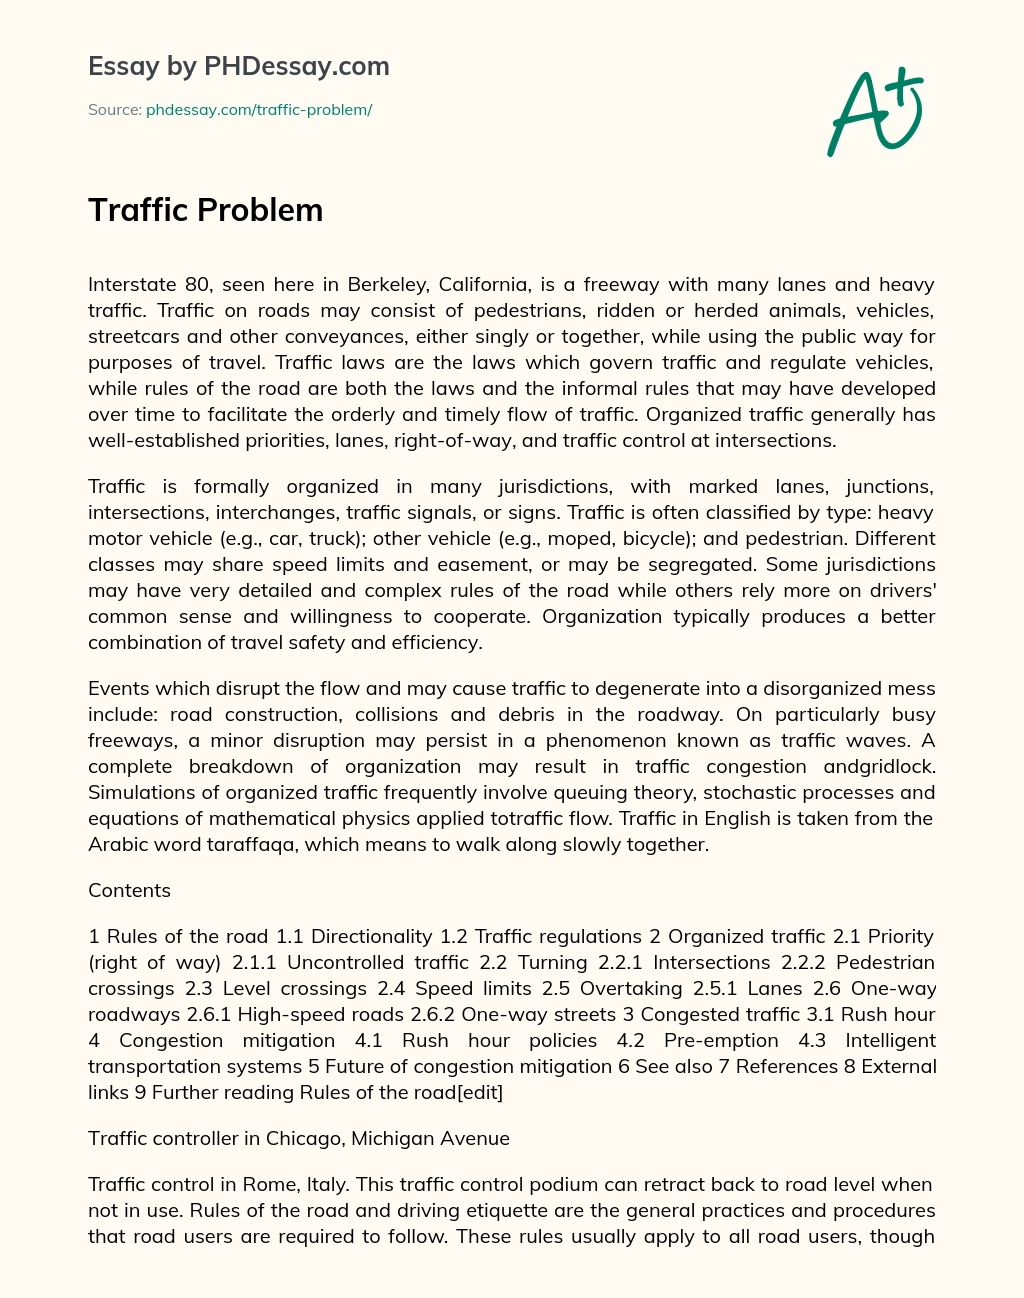 Traffic Problem essay